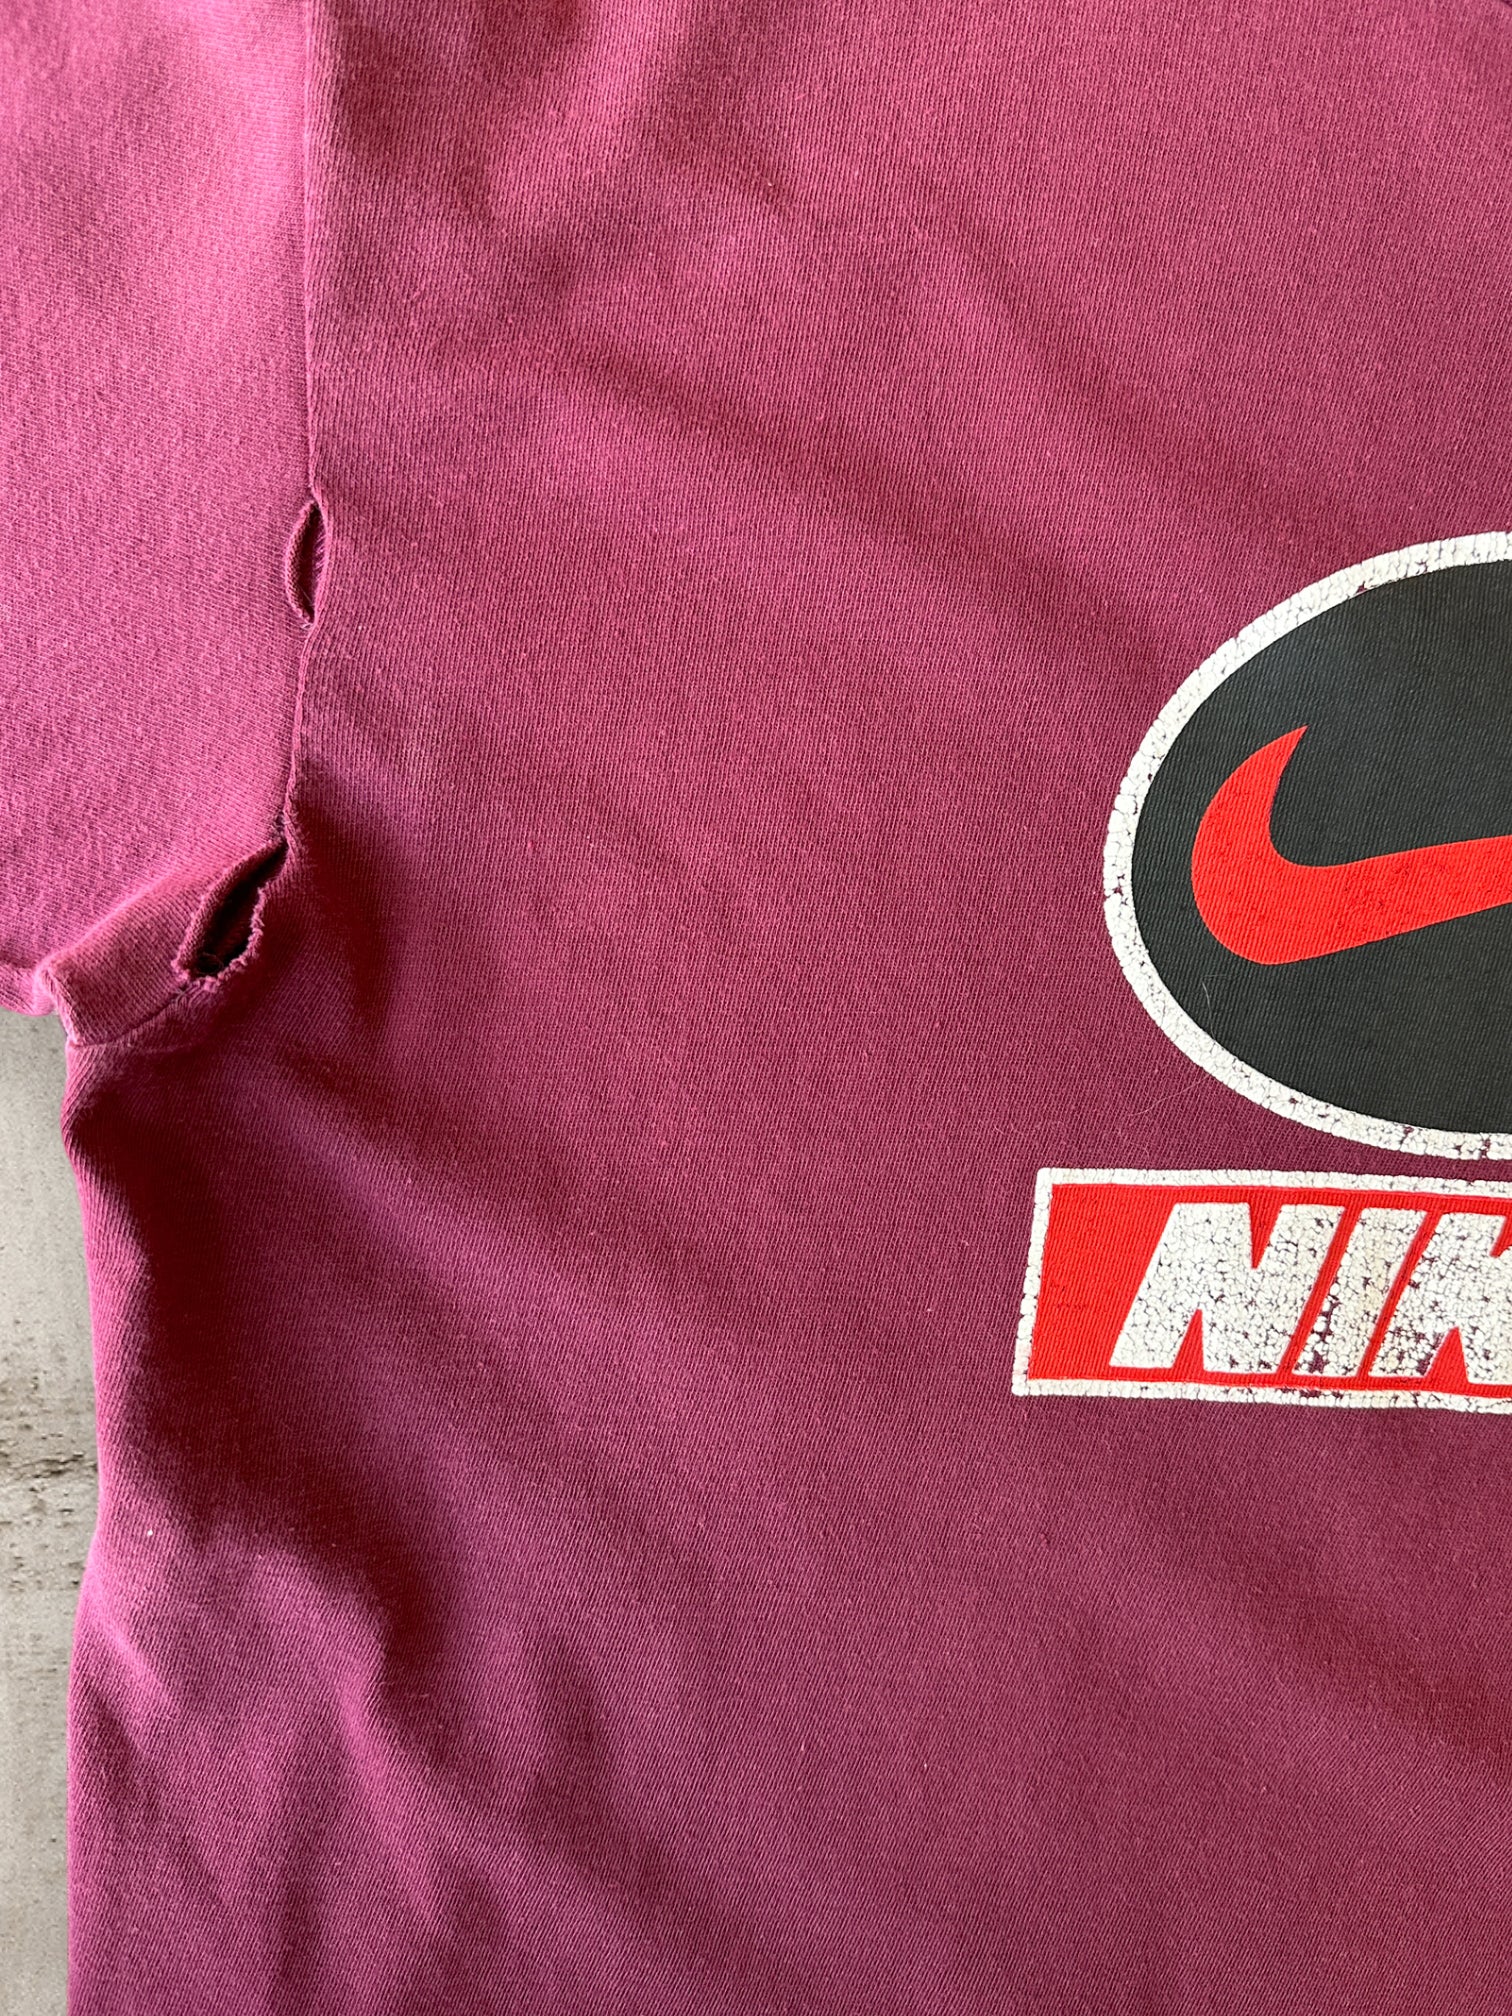 90s Bootleg Nike Maroon Graphic T-Shirt - XL